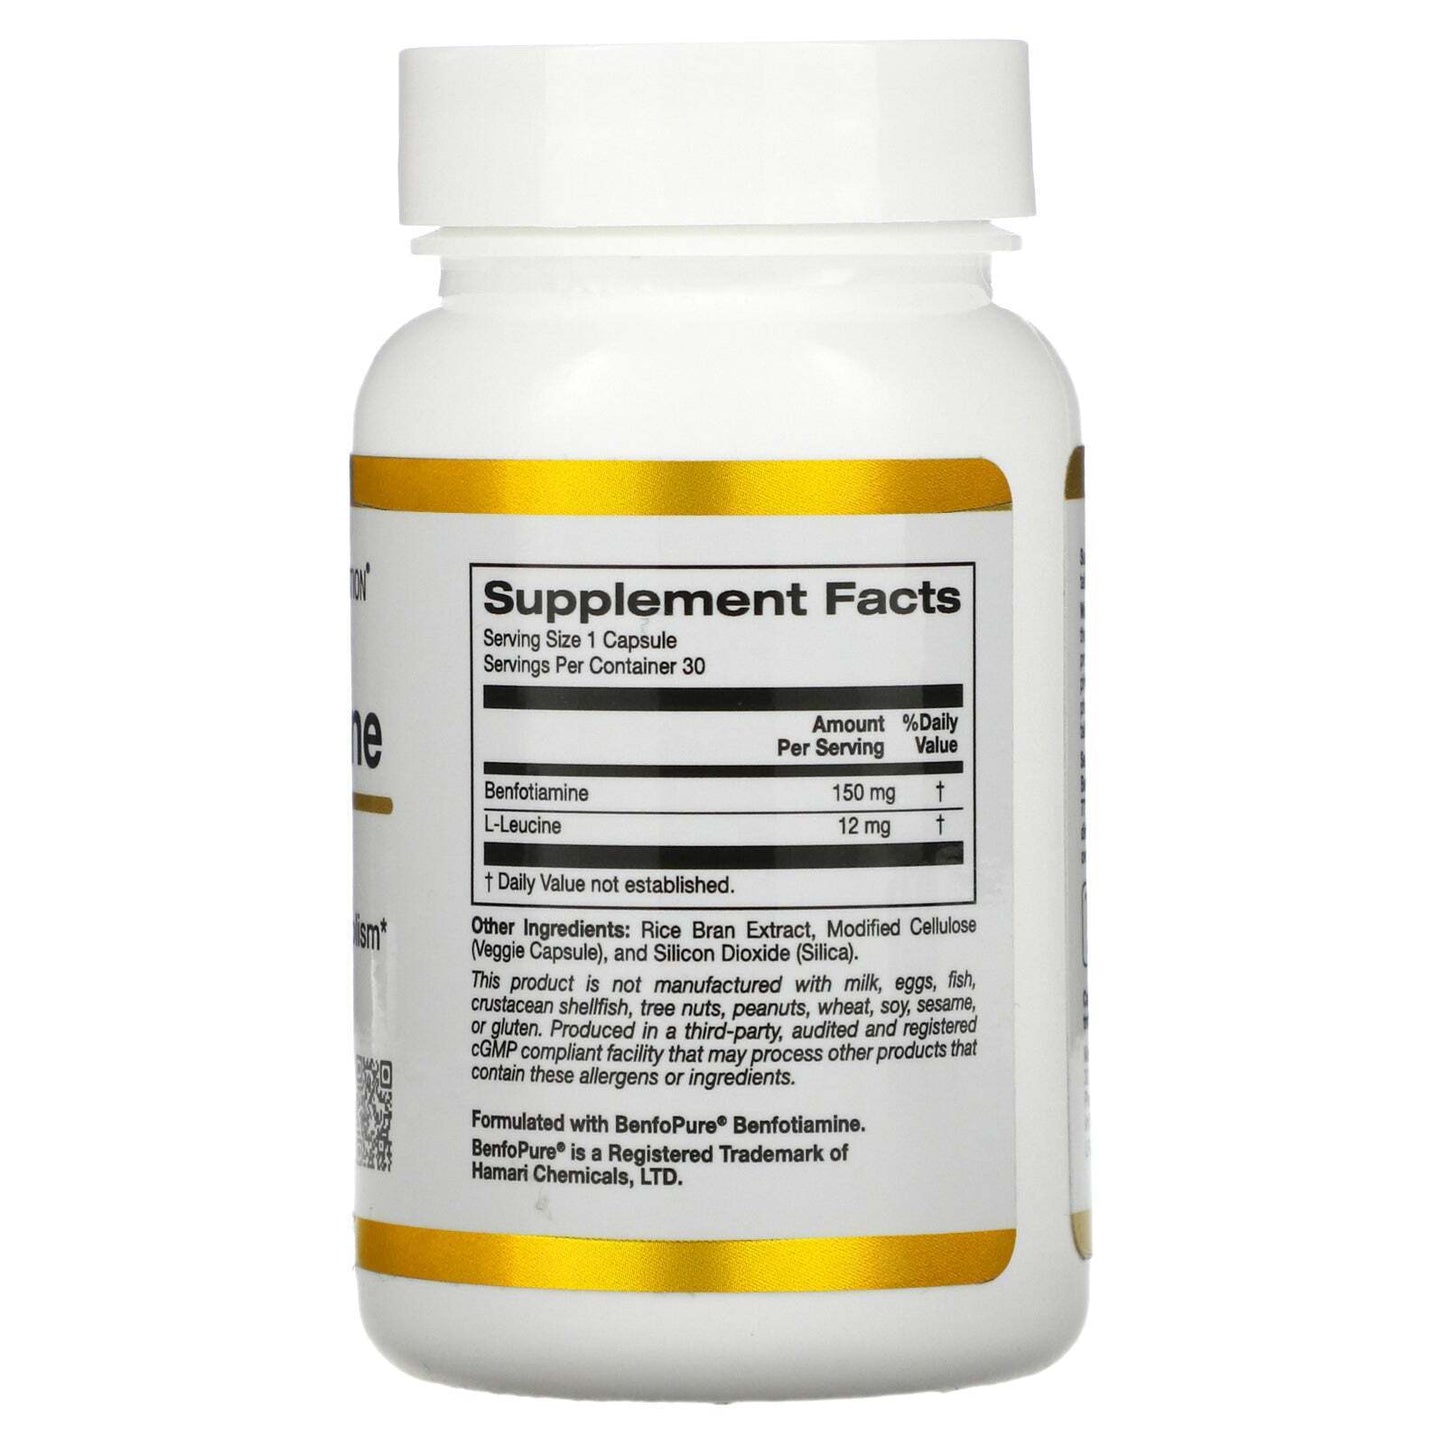 California Gold Nutrition Benfotiamine 150mg Glucose Metabolism 30 Veg Caps NEW